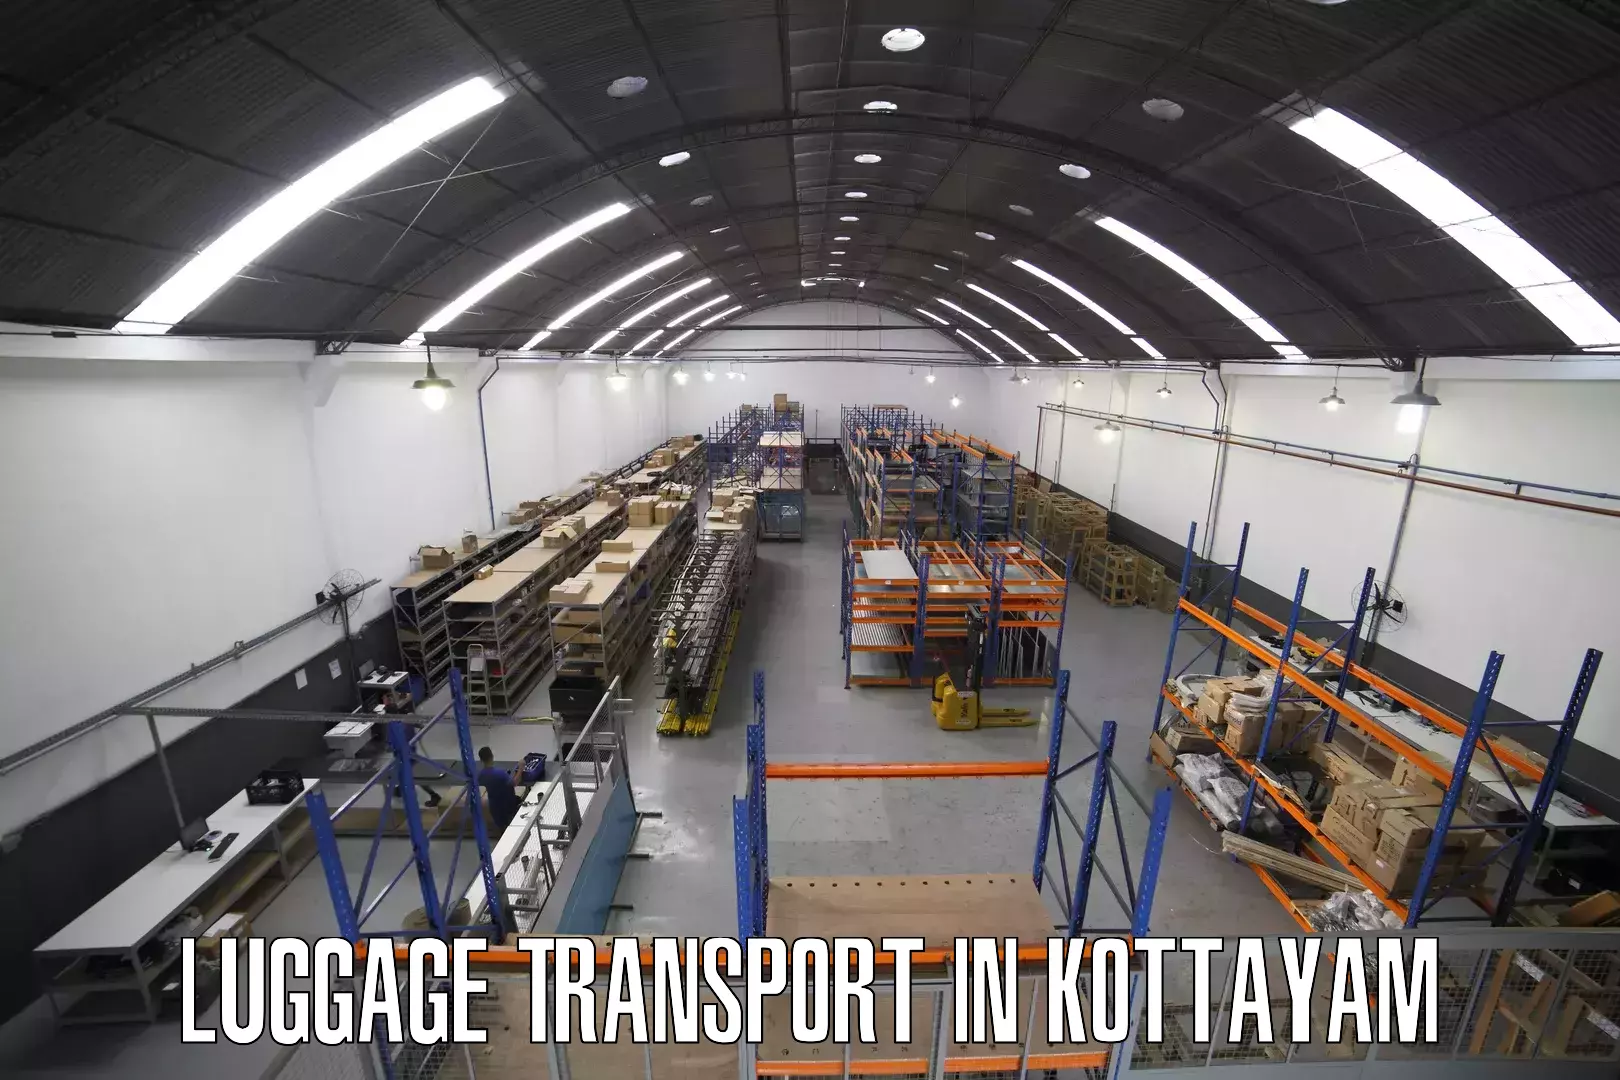 High-quality baggage shipment in Kottayam